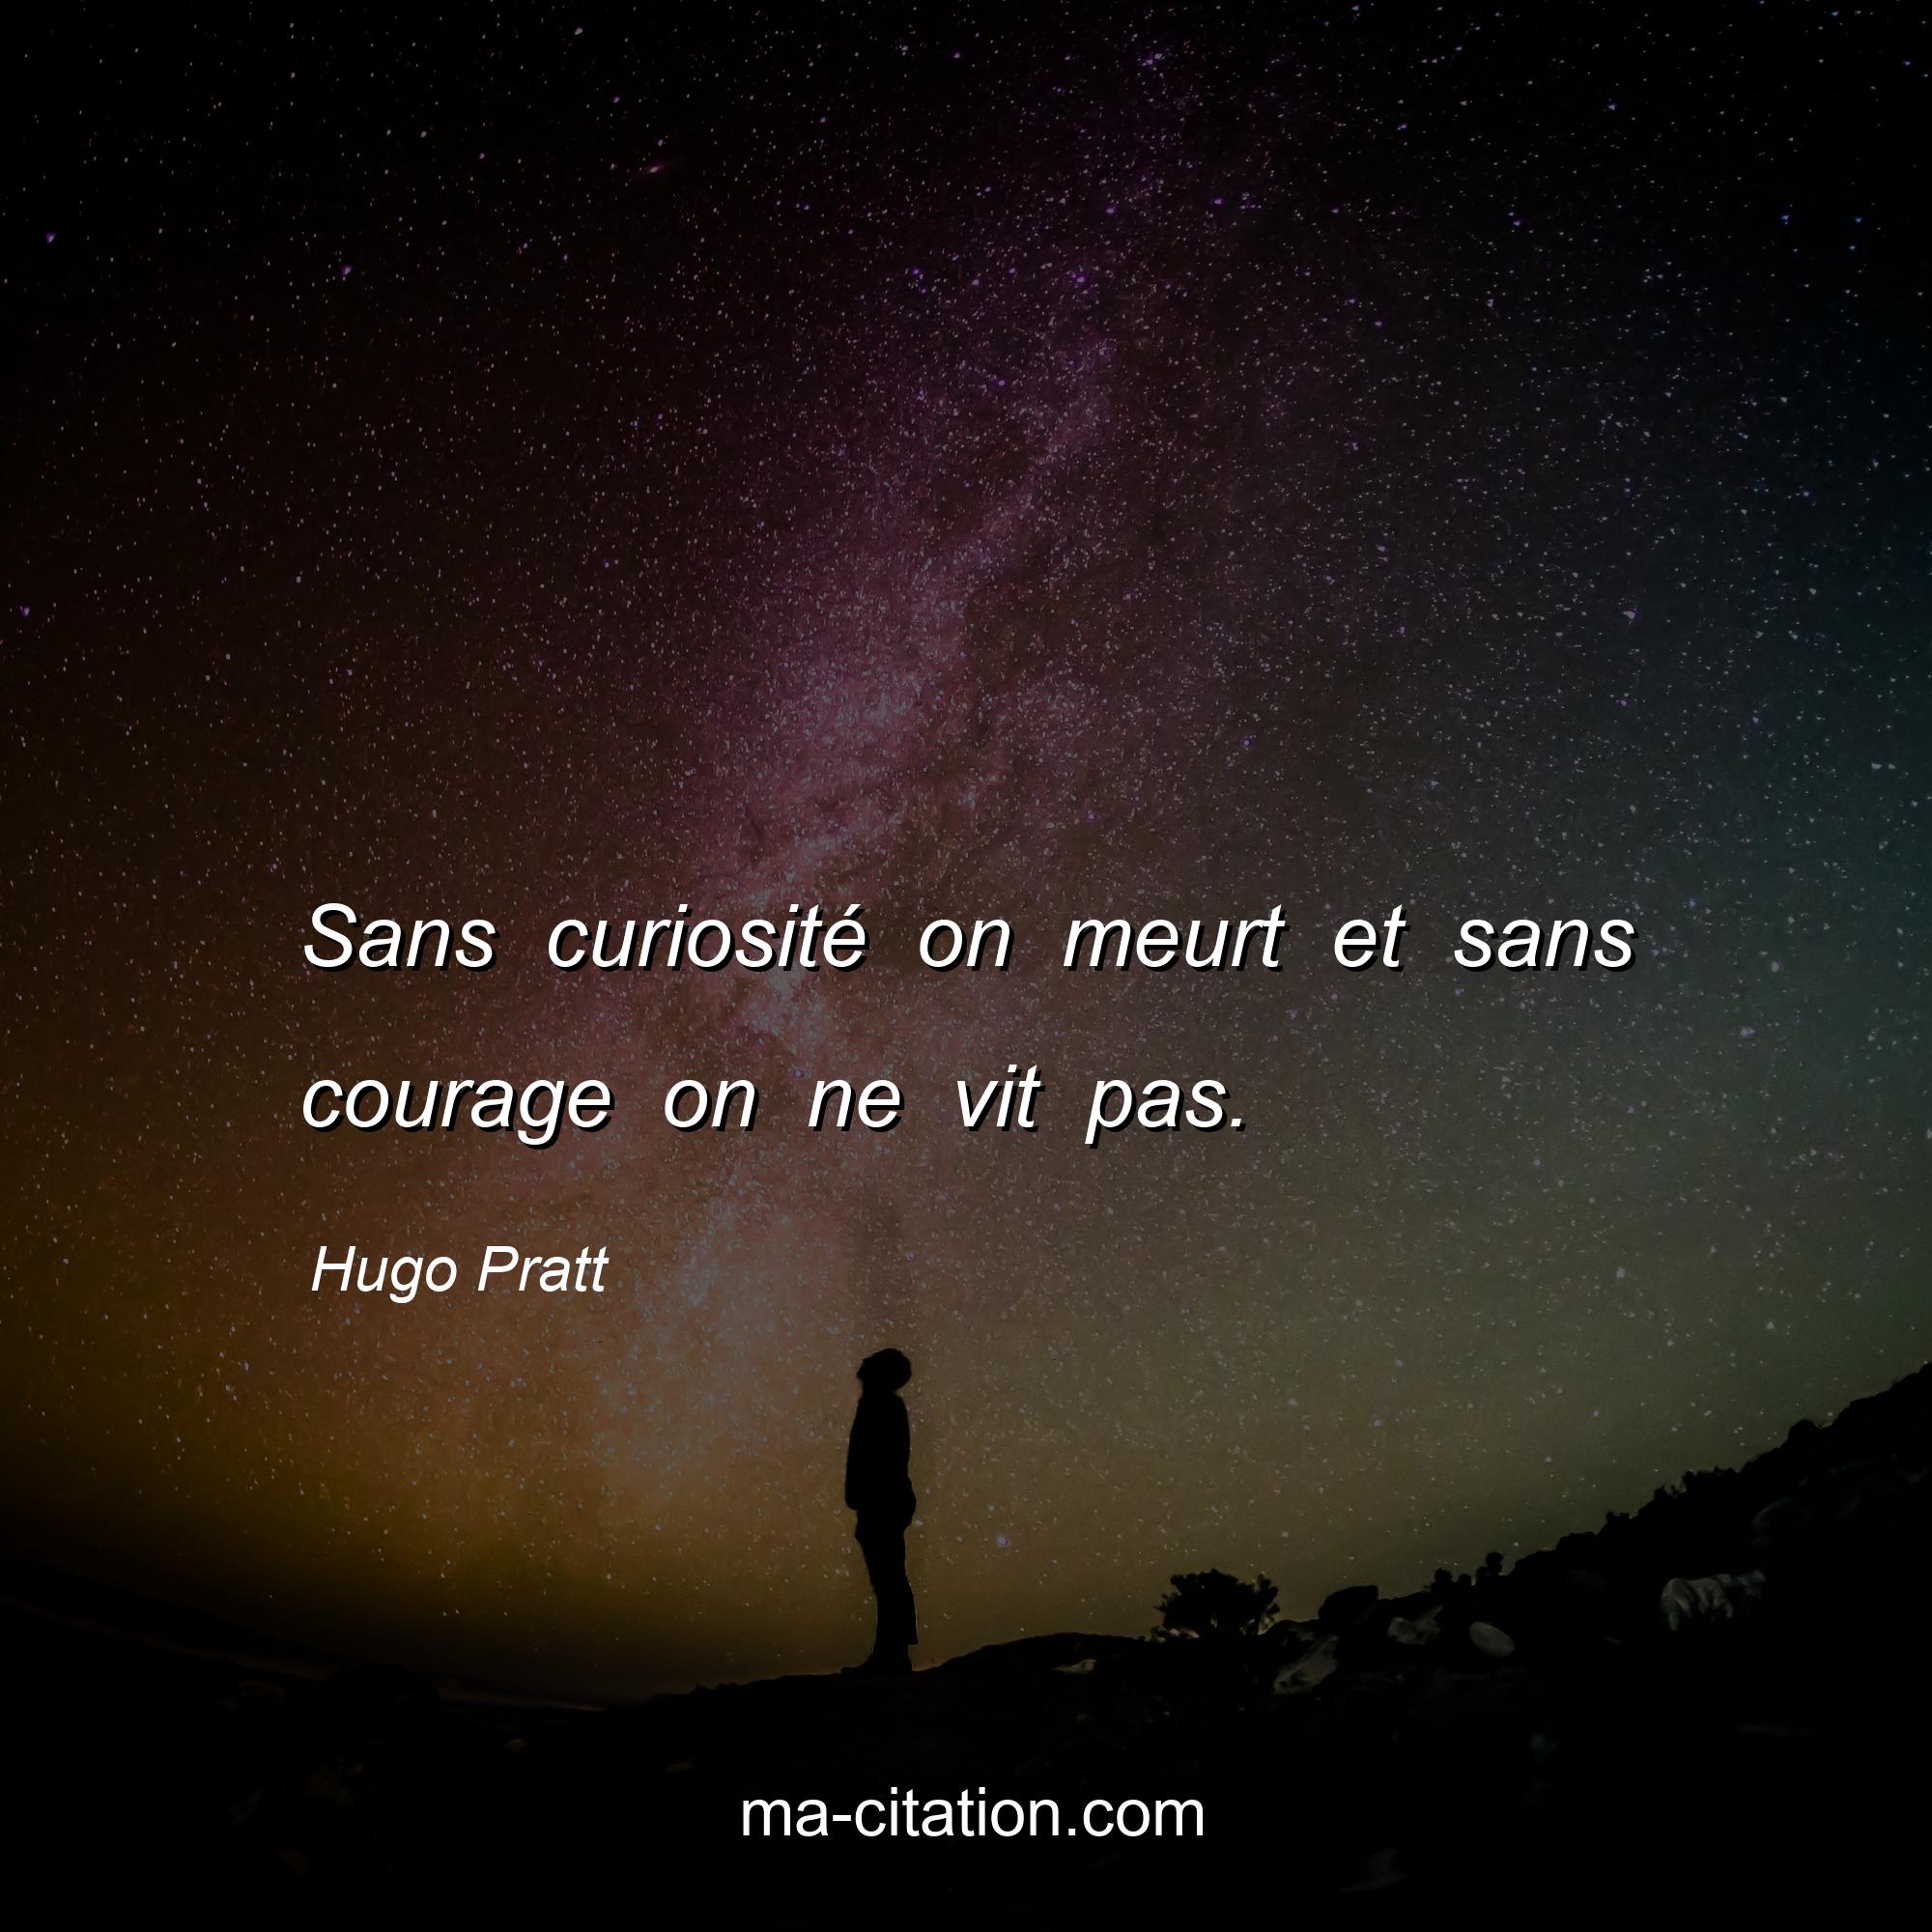 Hugo Pratt : Sans curiosité on meurt et sans courage on ne vit pas.